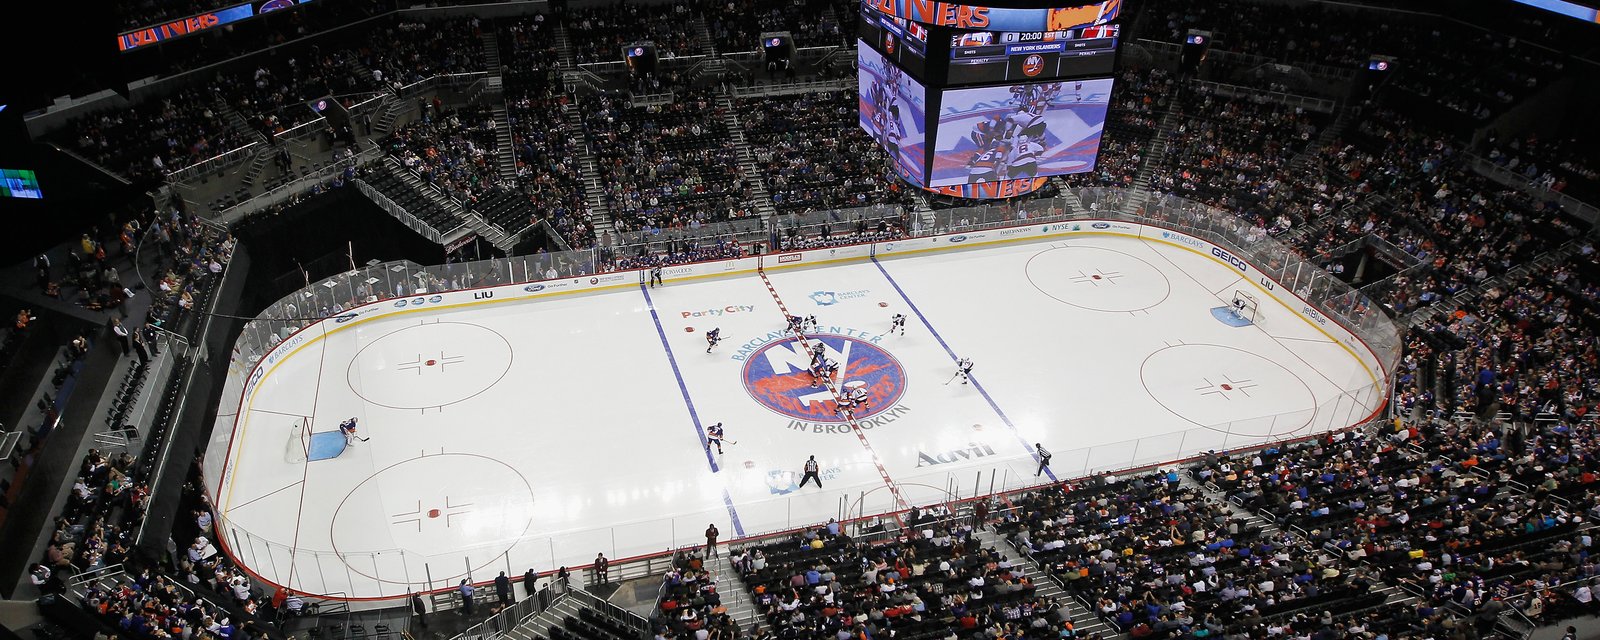 Islanders set embarrassing new low in attendance for regular season game against Sharks 